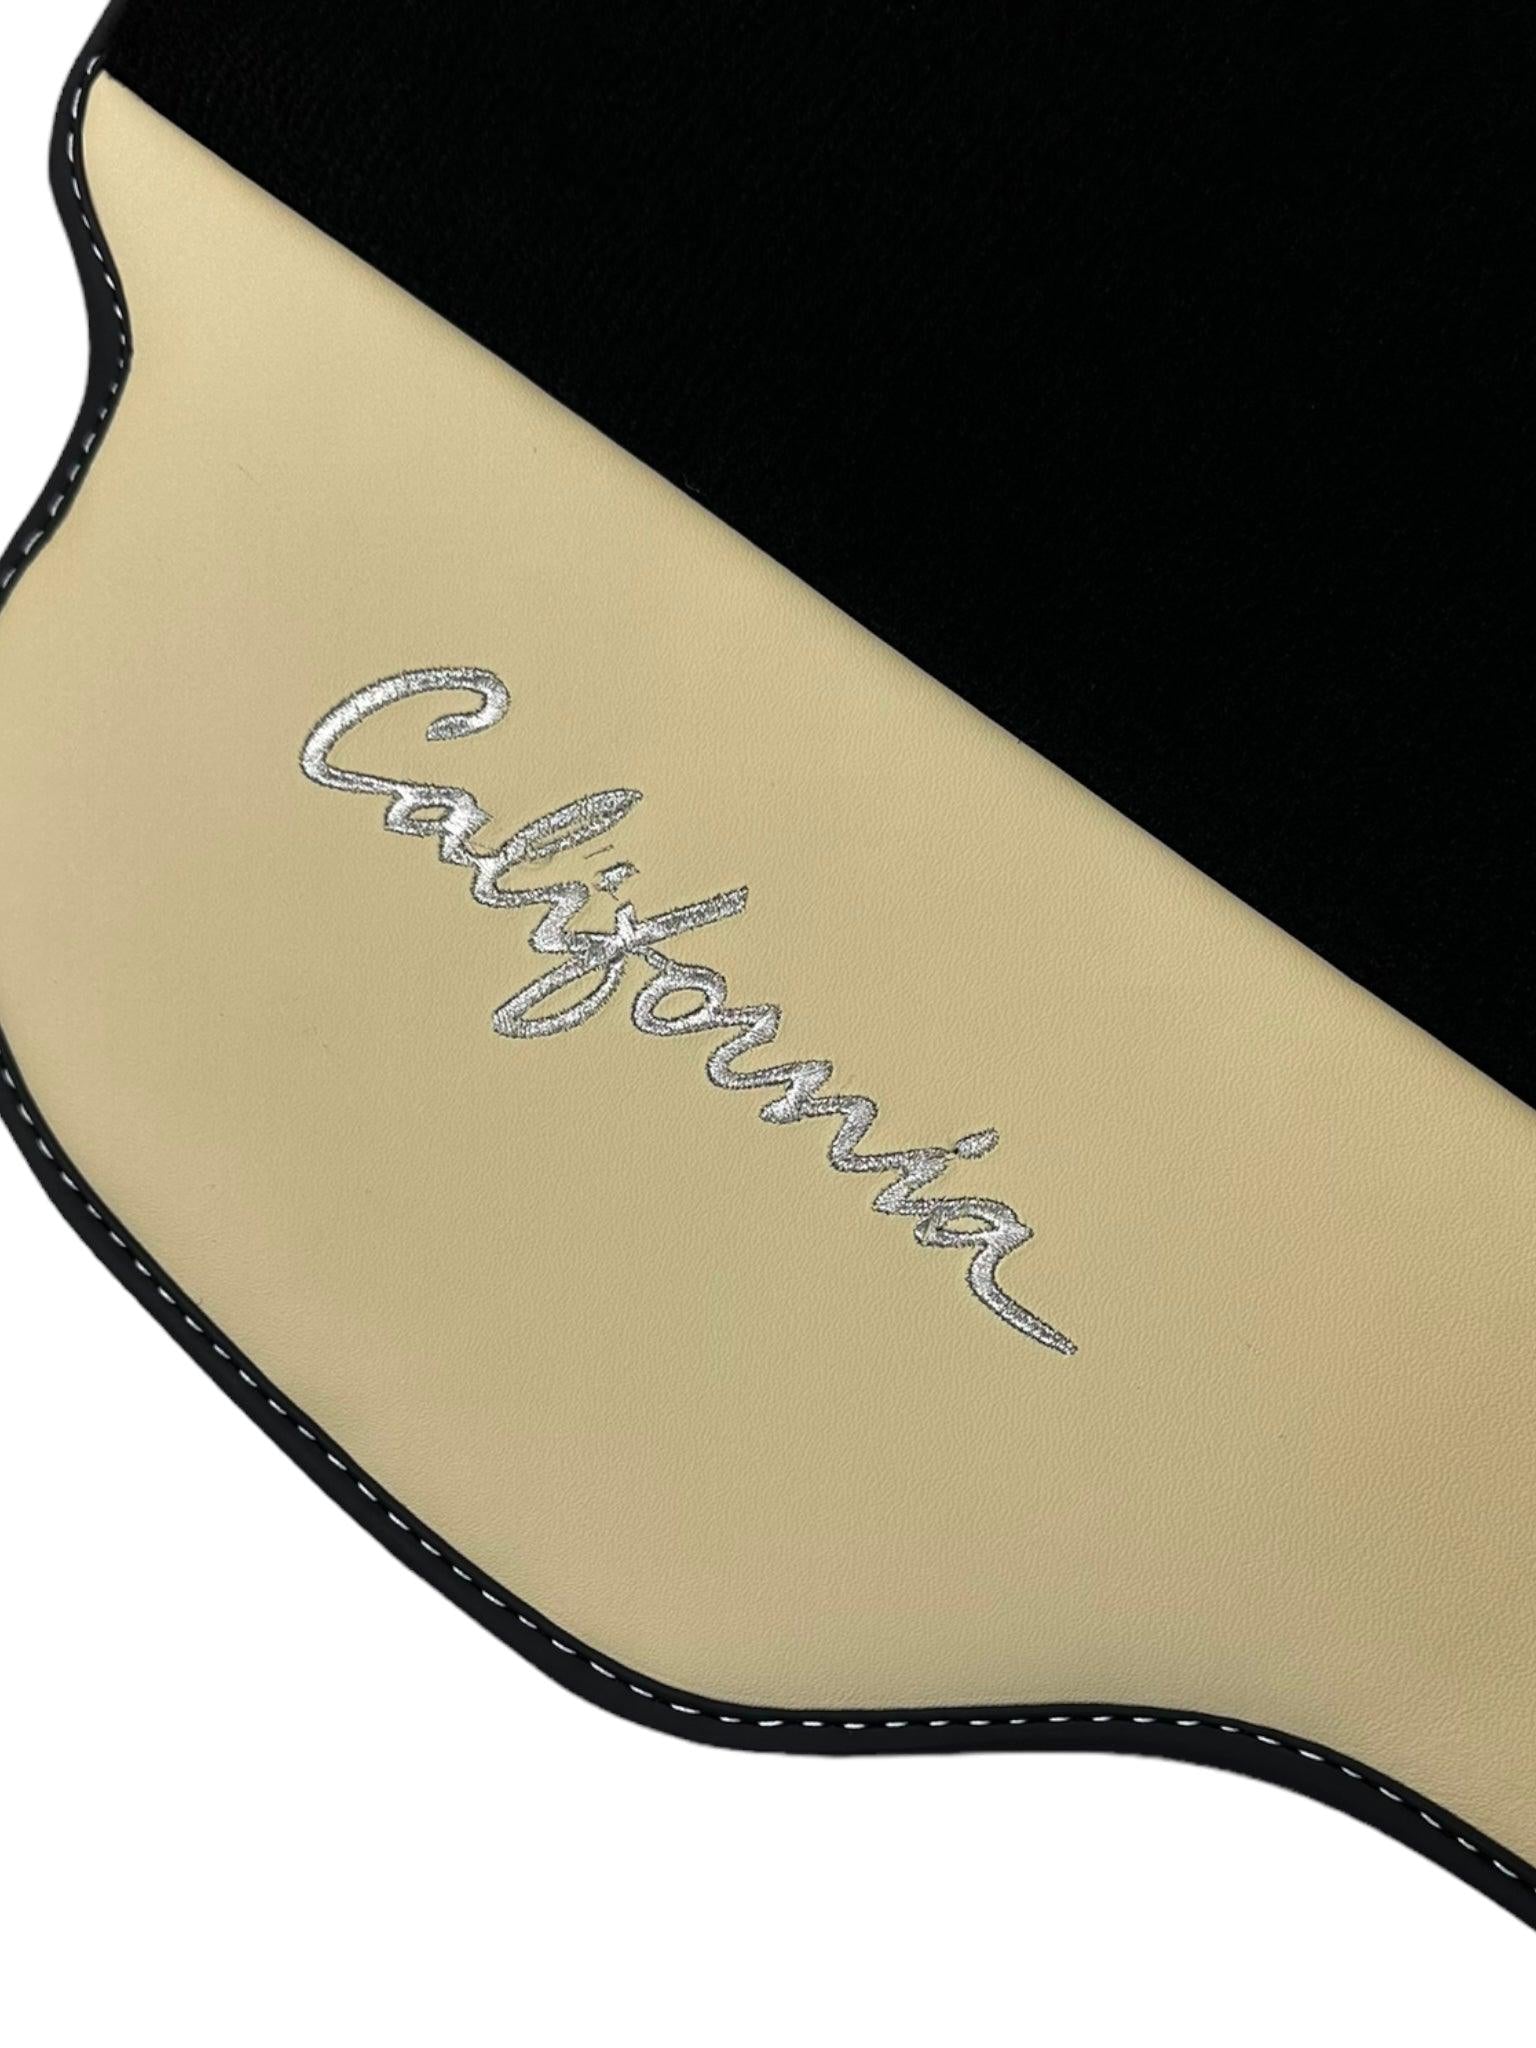 Black Floor Mats for Ferrari California (2008-2014) with Crema Nappa Leather